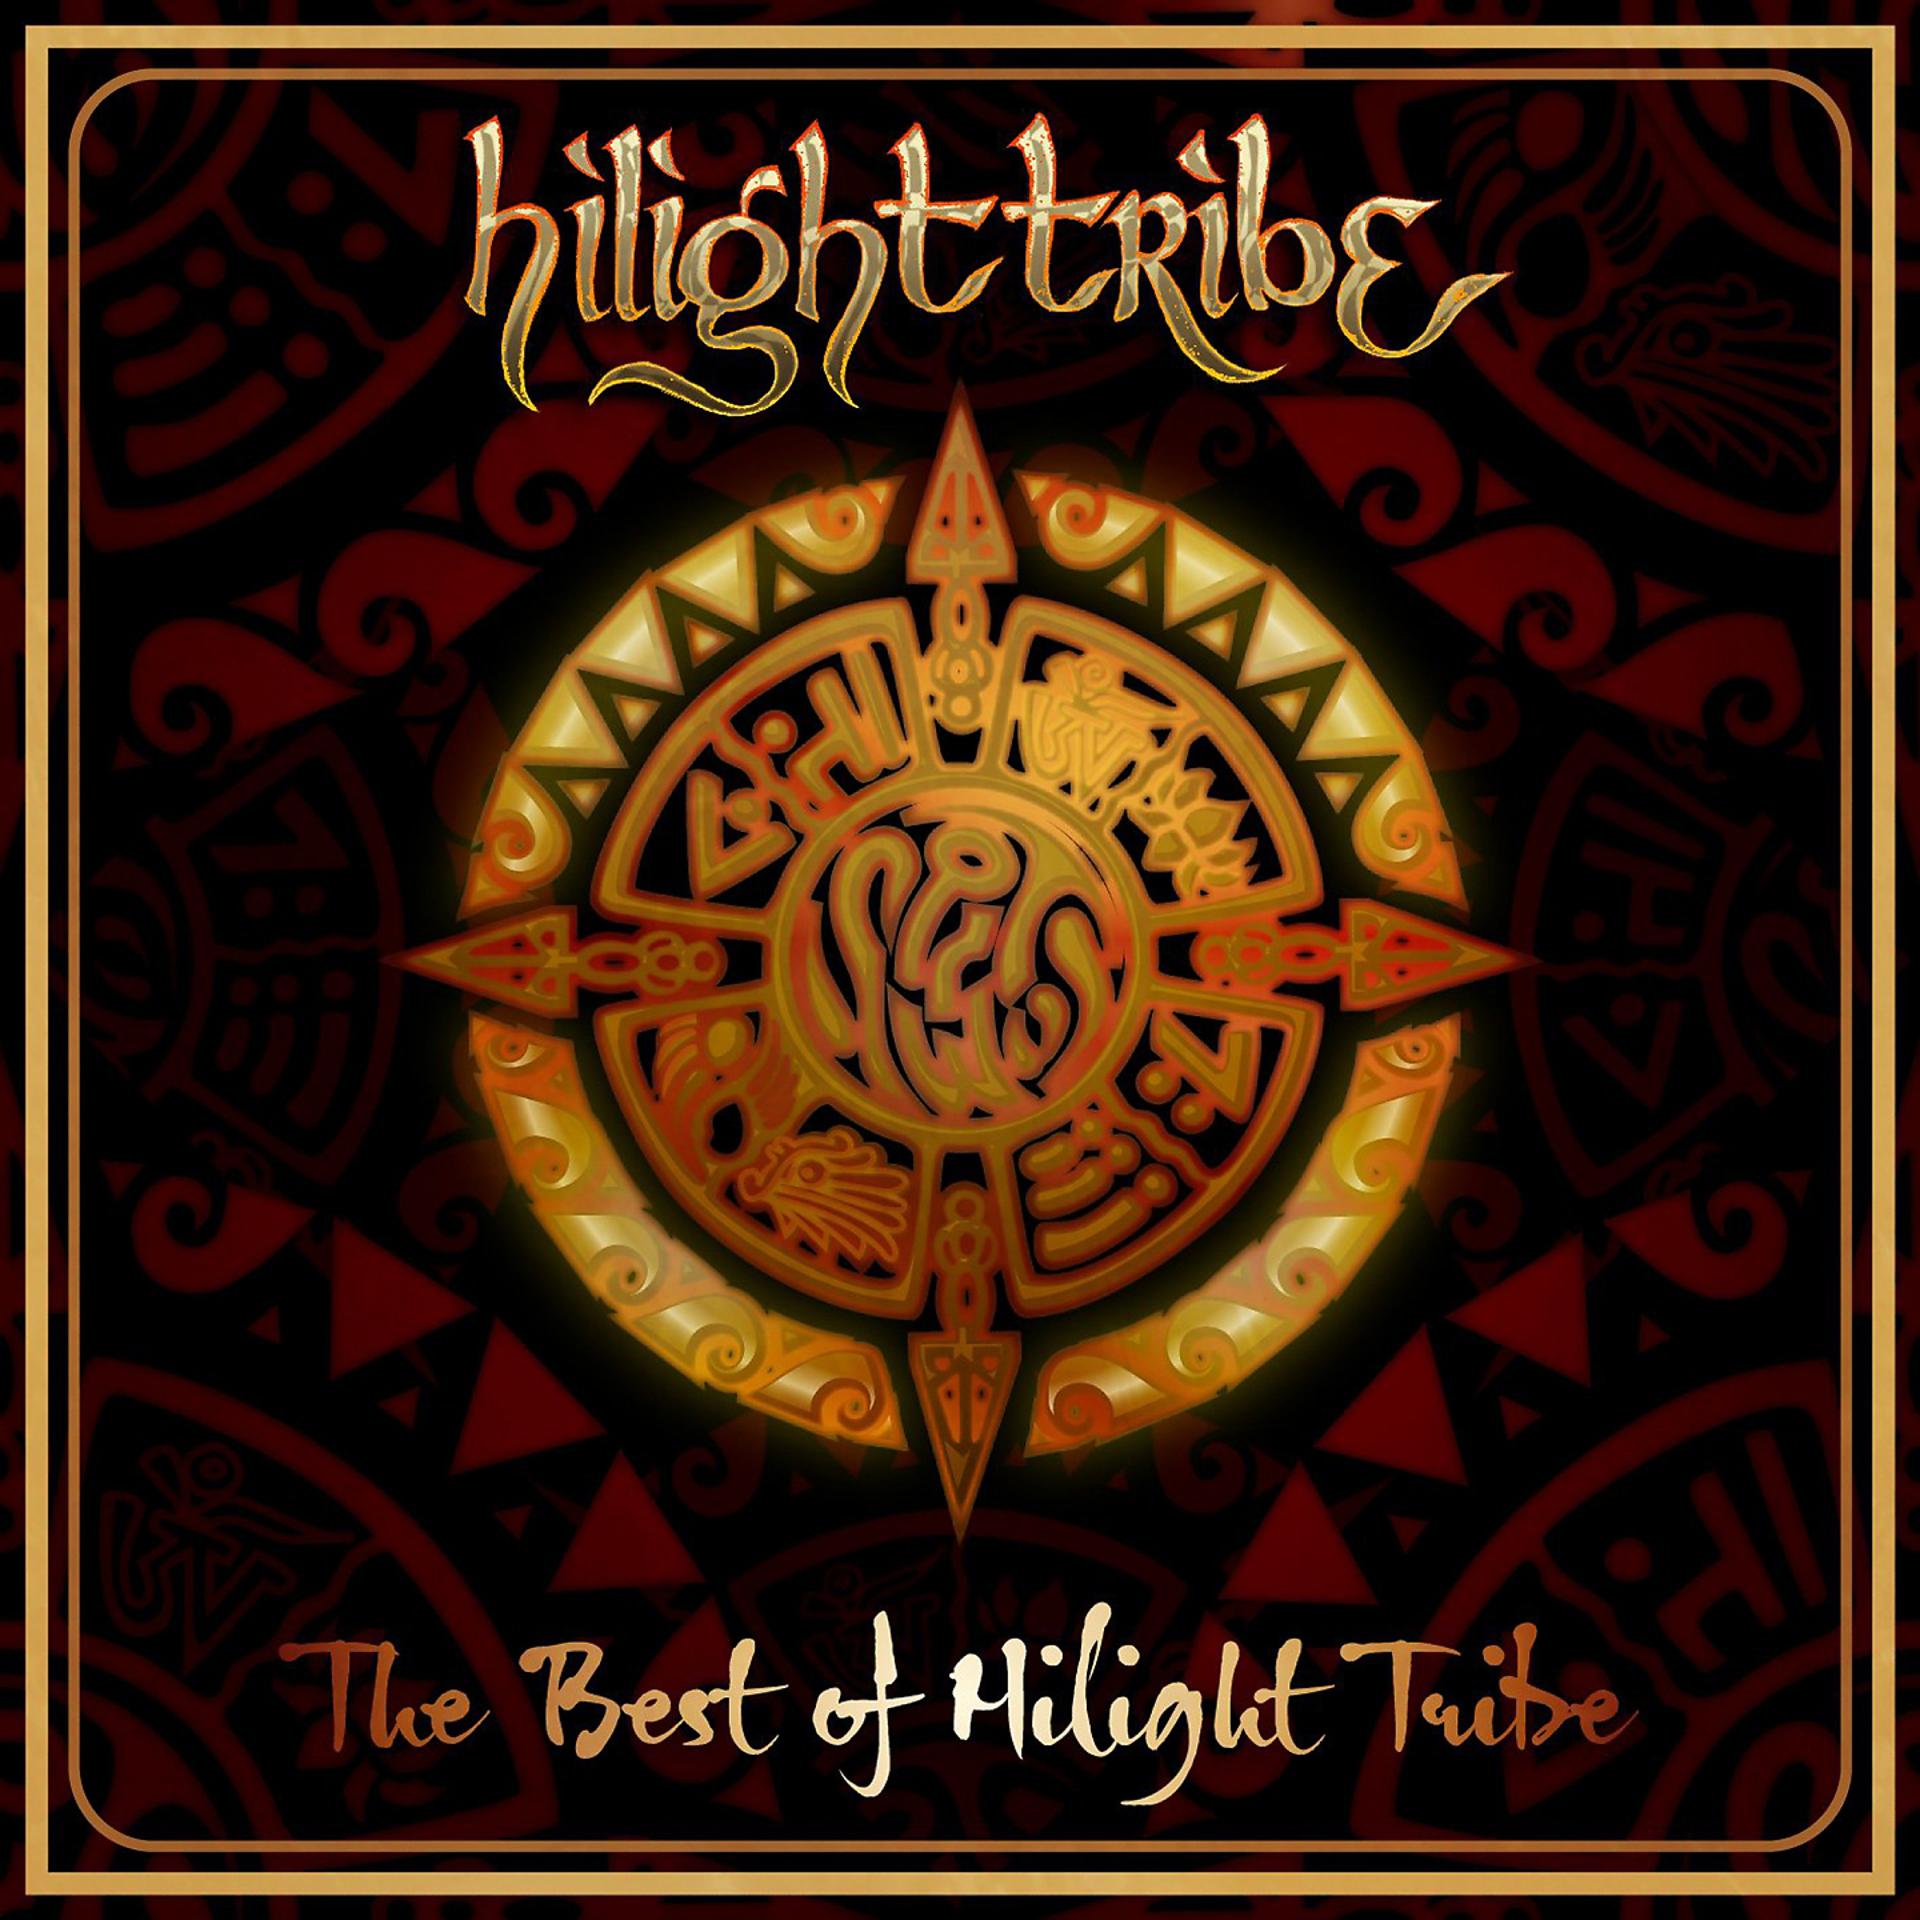 Hilight tribe. Hilight Tribe vargan. Tendie Tribe логотип.